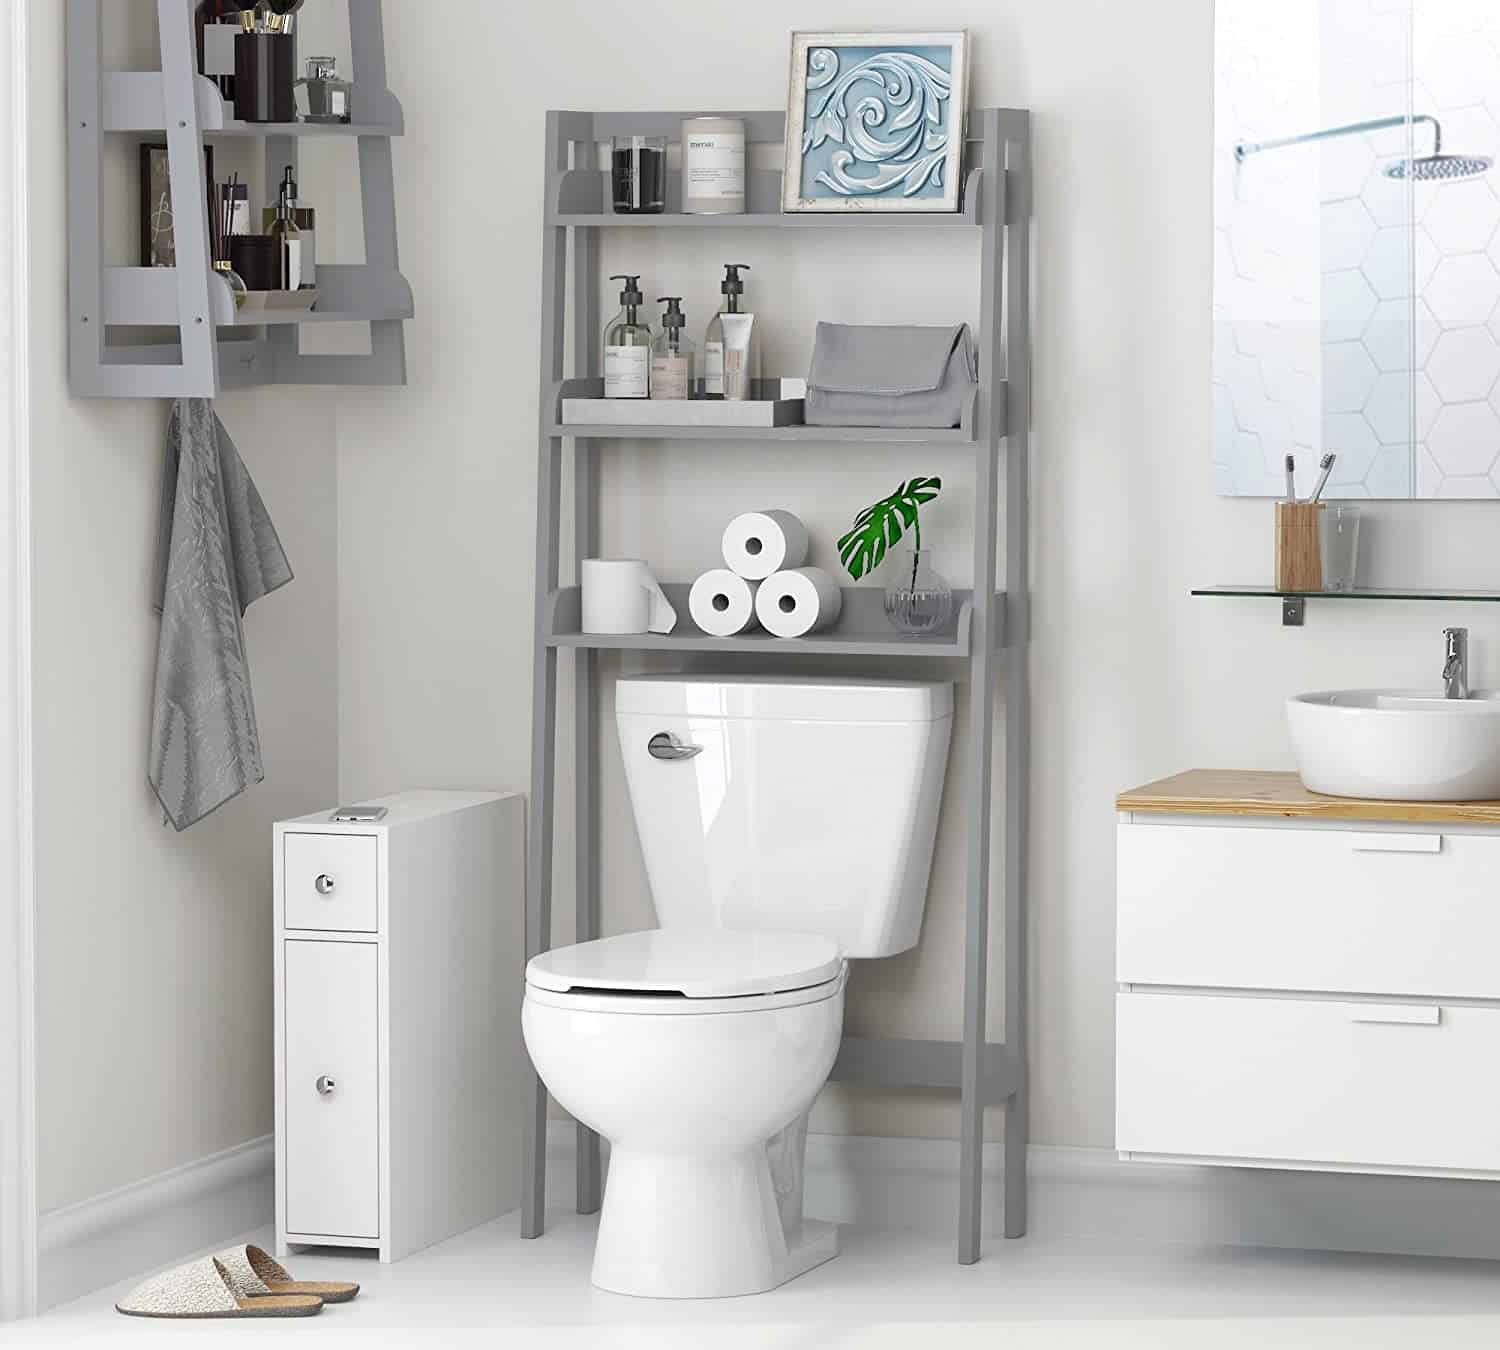 bathroom-shelves-over-toilet-grey-ladder-styel - Learn Along with Me